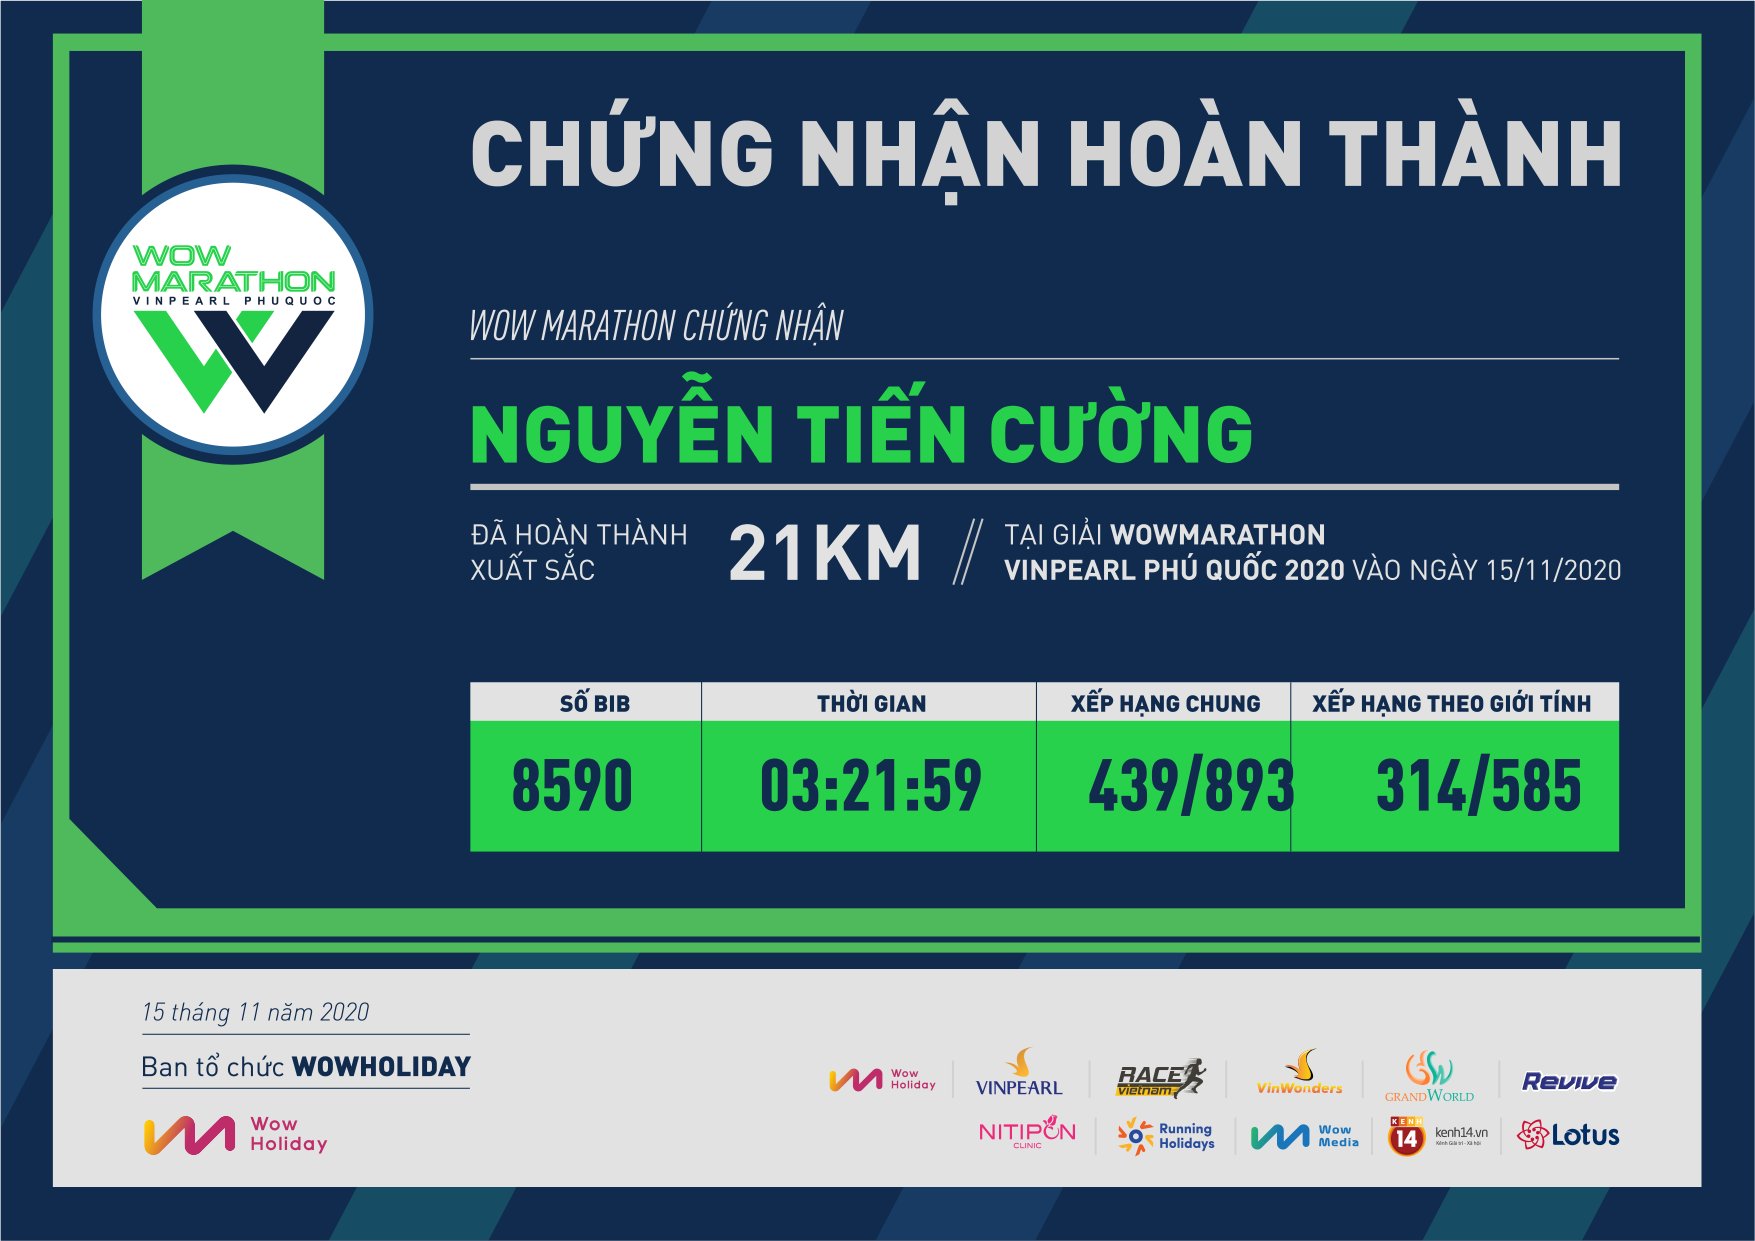 8590 - Nguyễn Tiến Cường